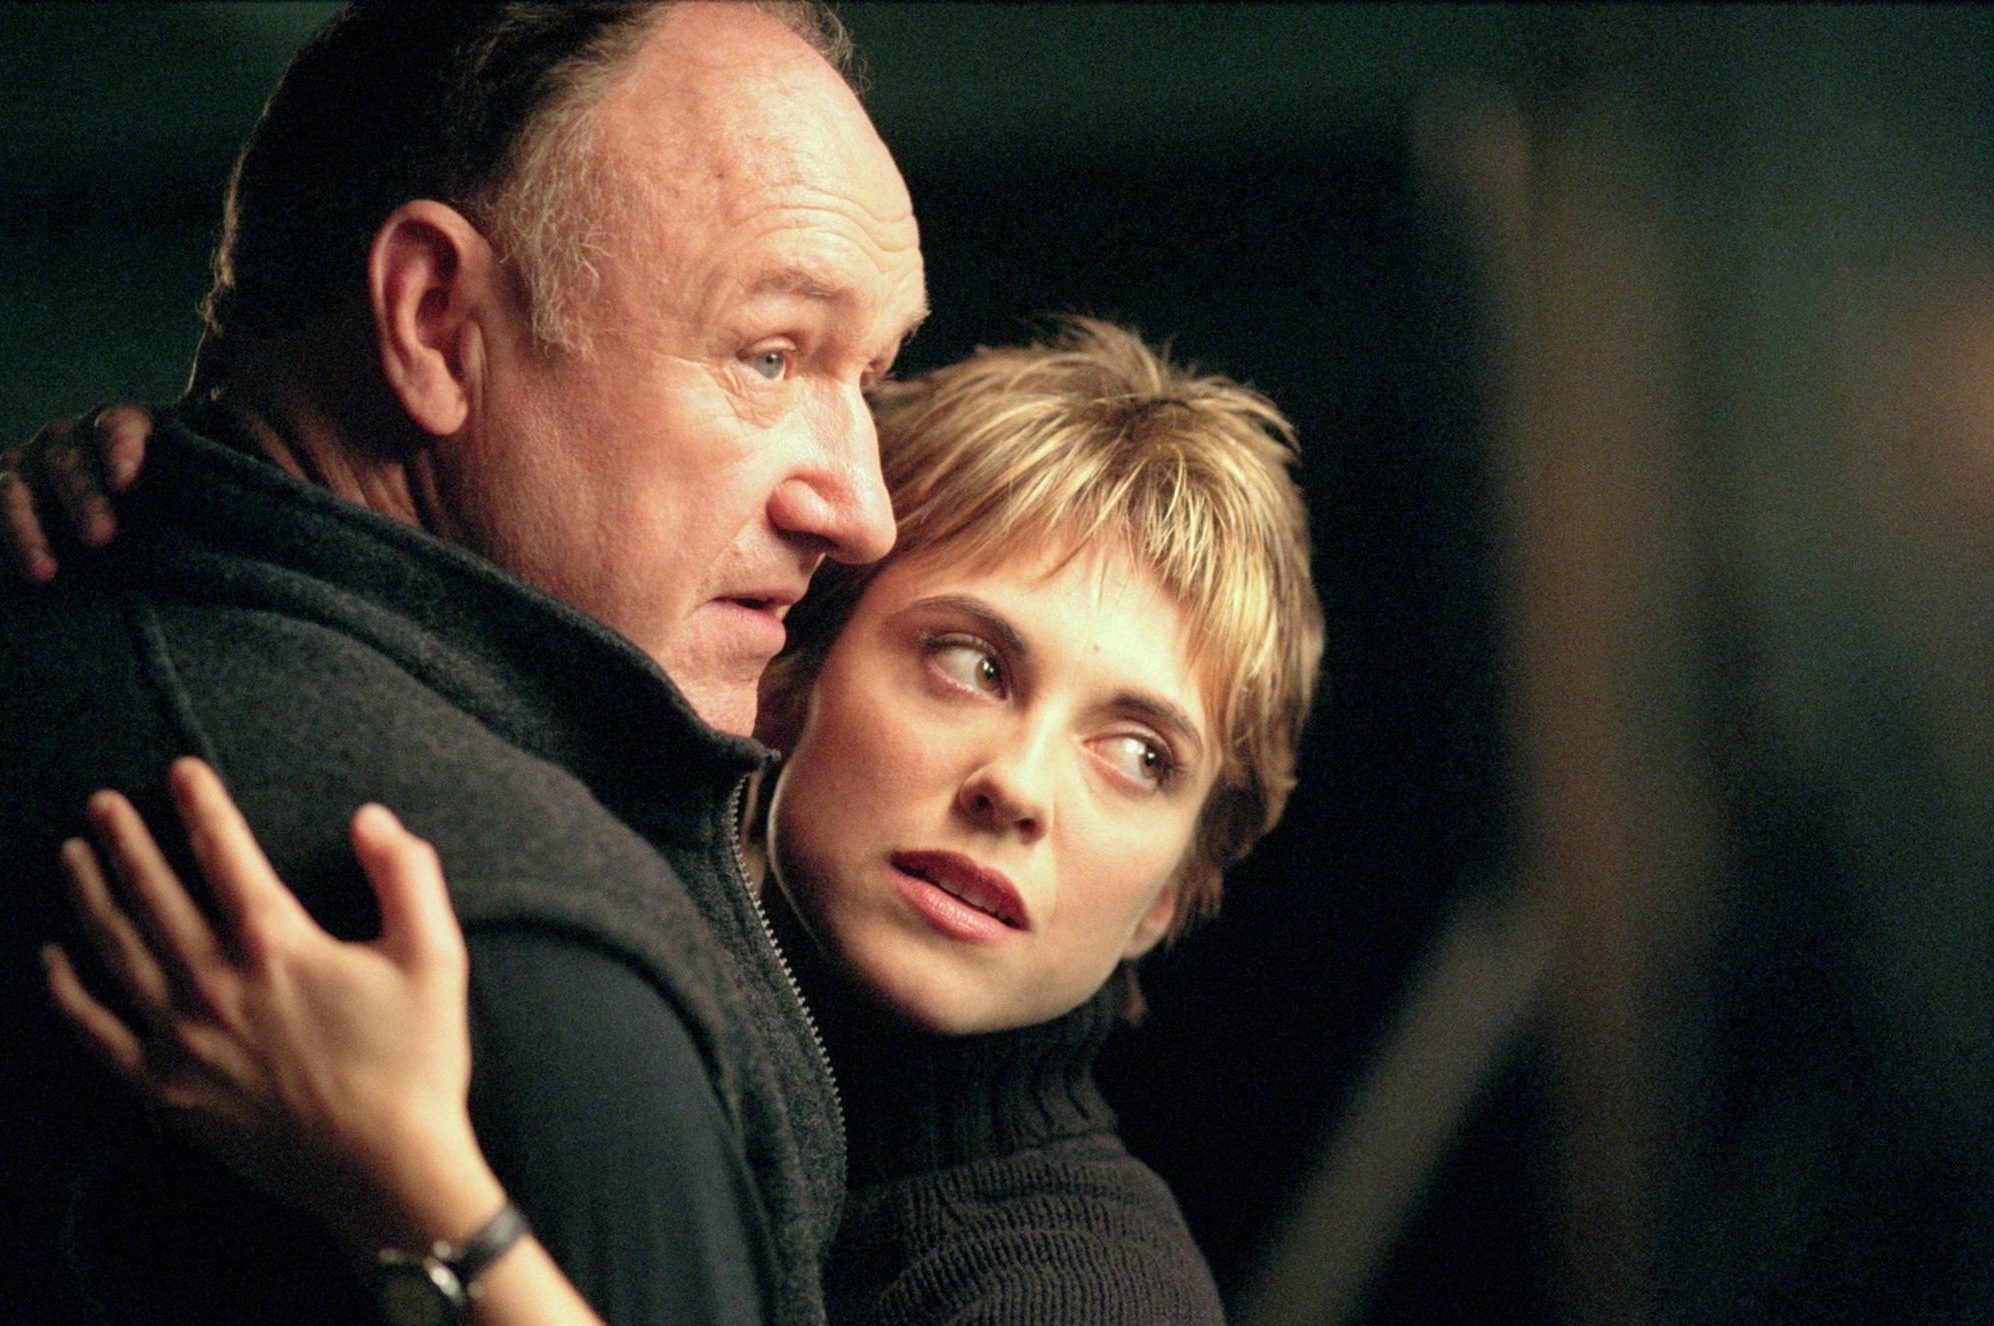 Still of Gene Hackman and Rebecca Pidgeon in Heist (2001)